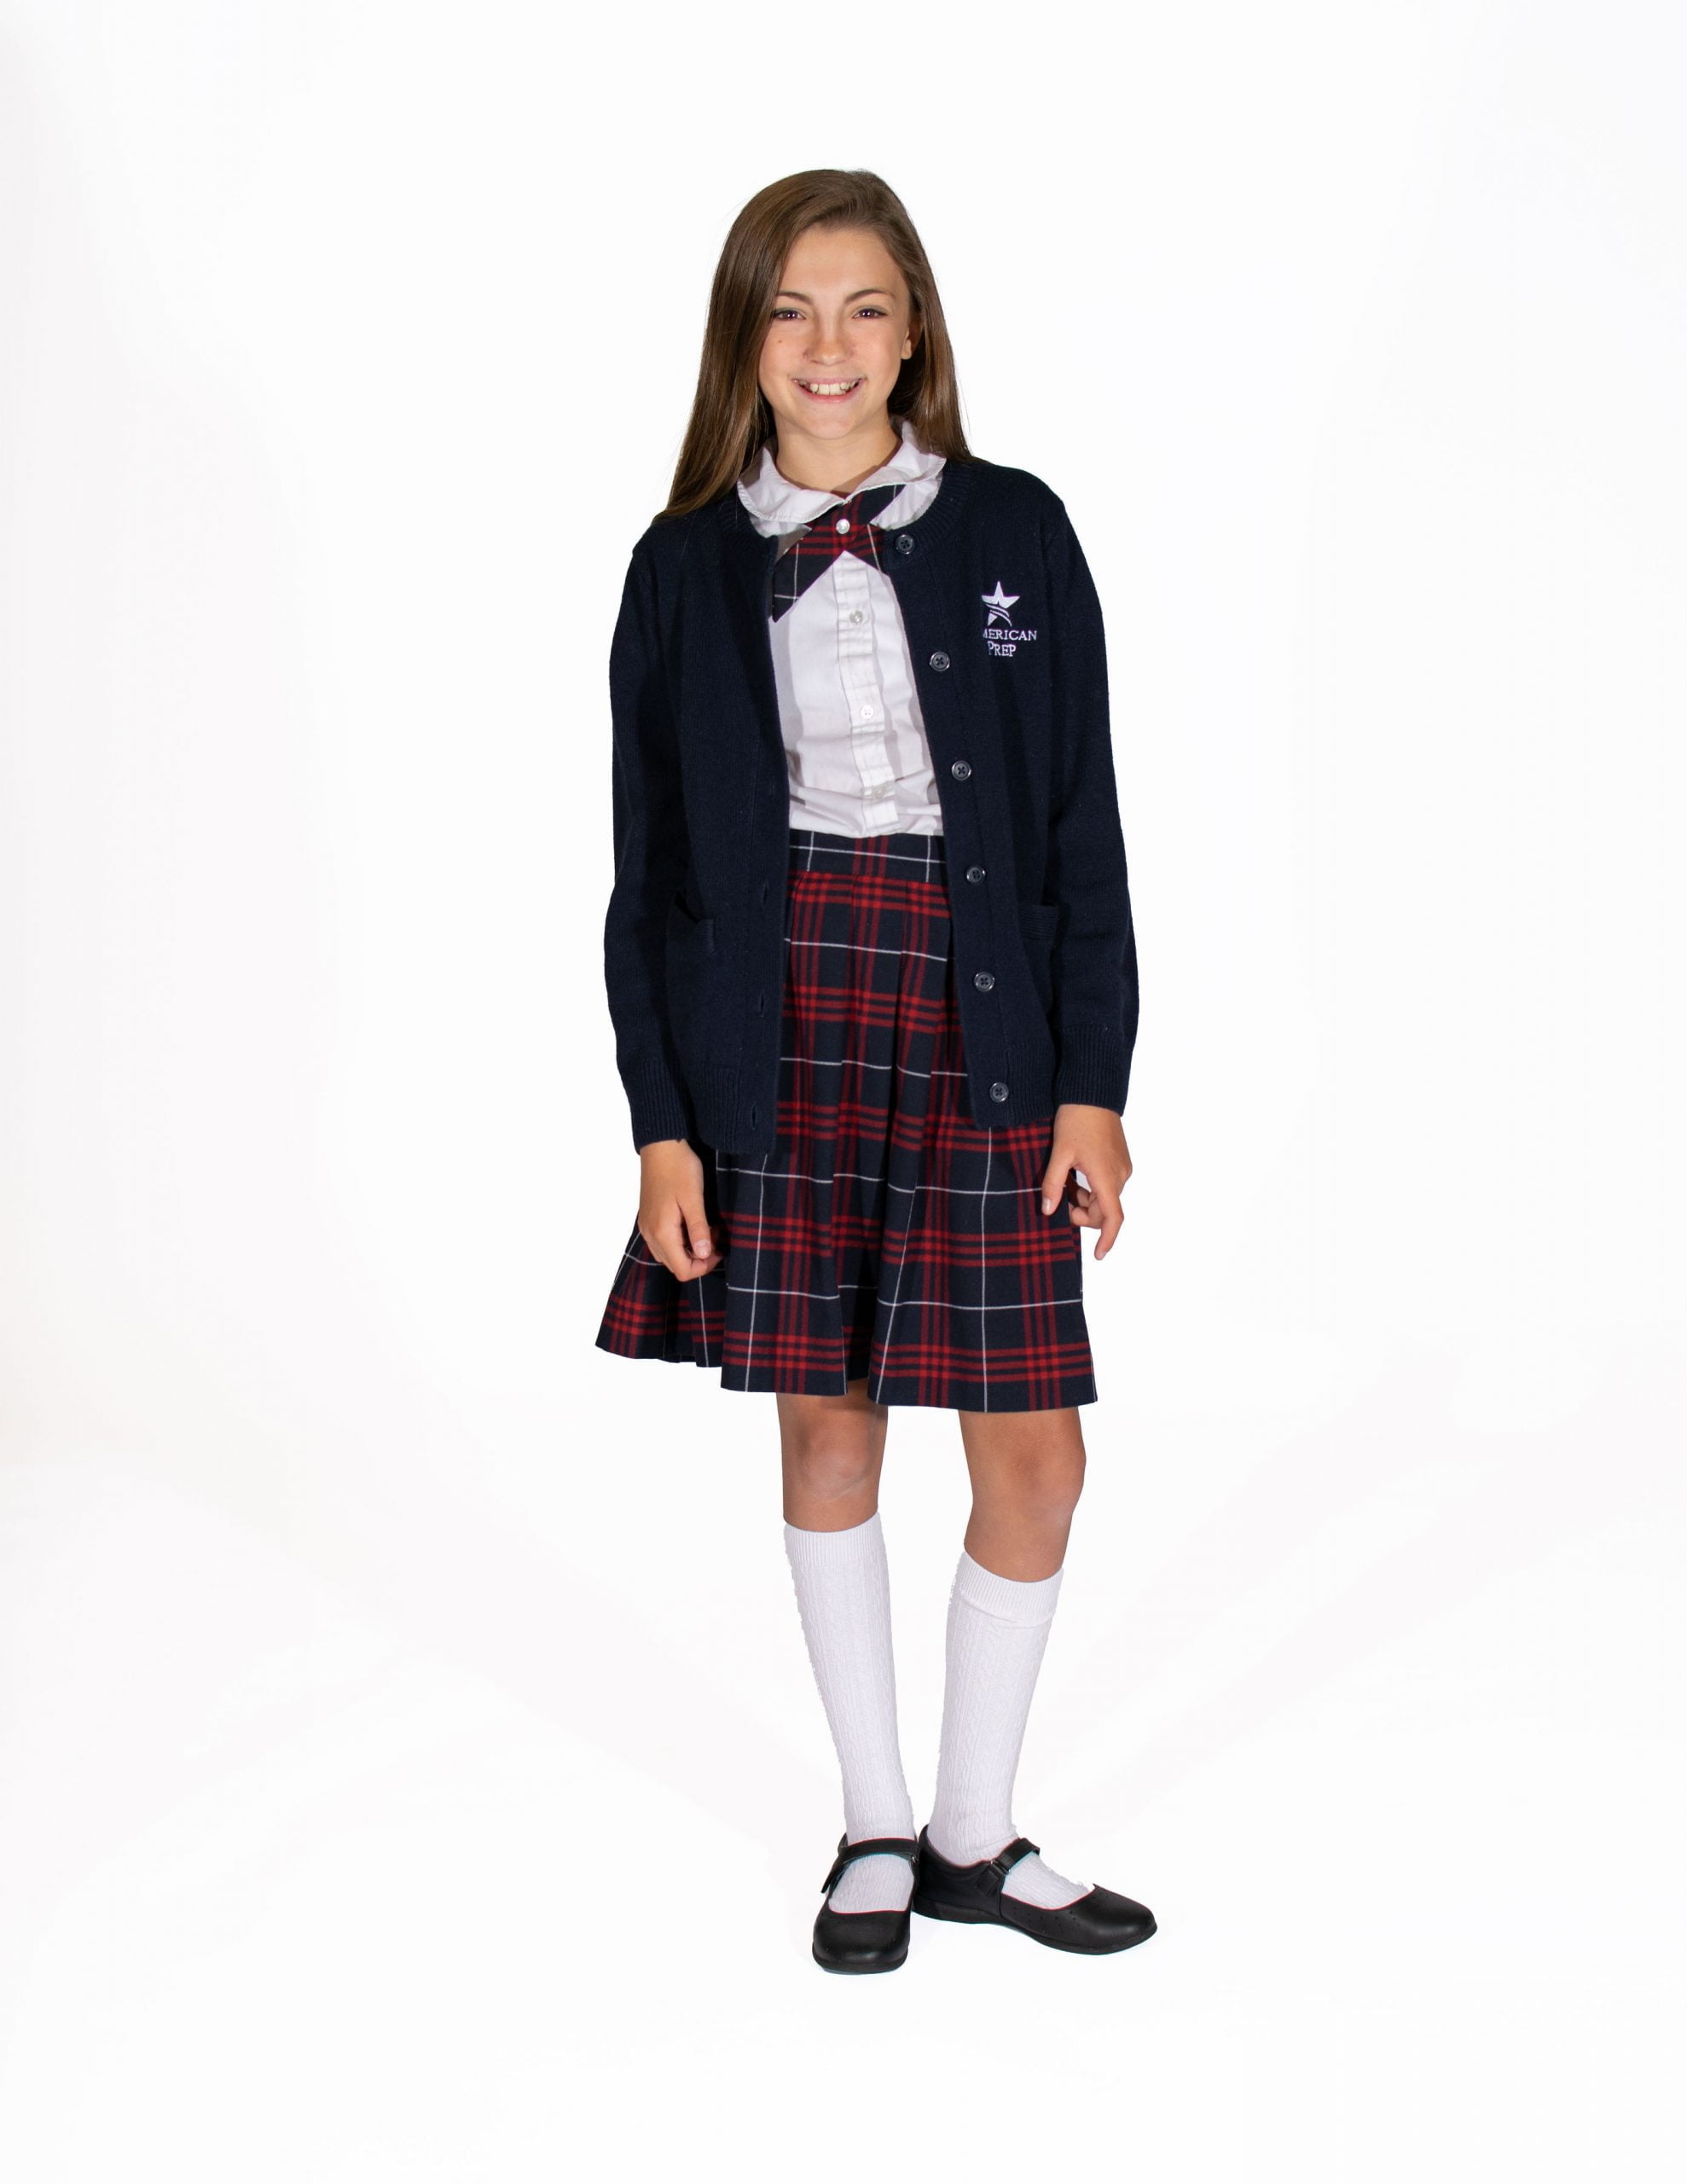 School Uniform Girls Long Sleeve Ruffled Peter Pan Collar Knit